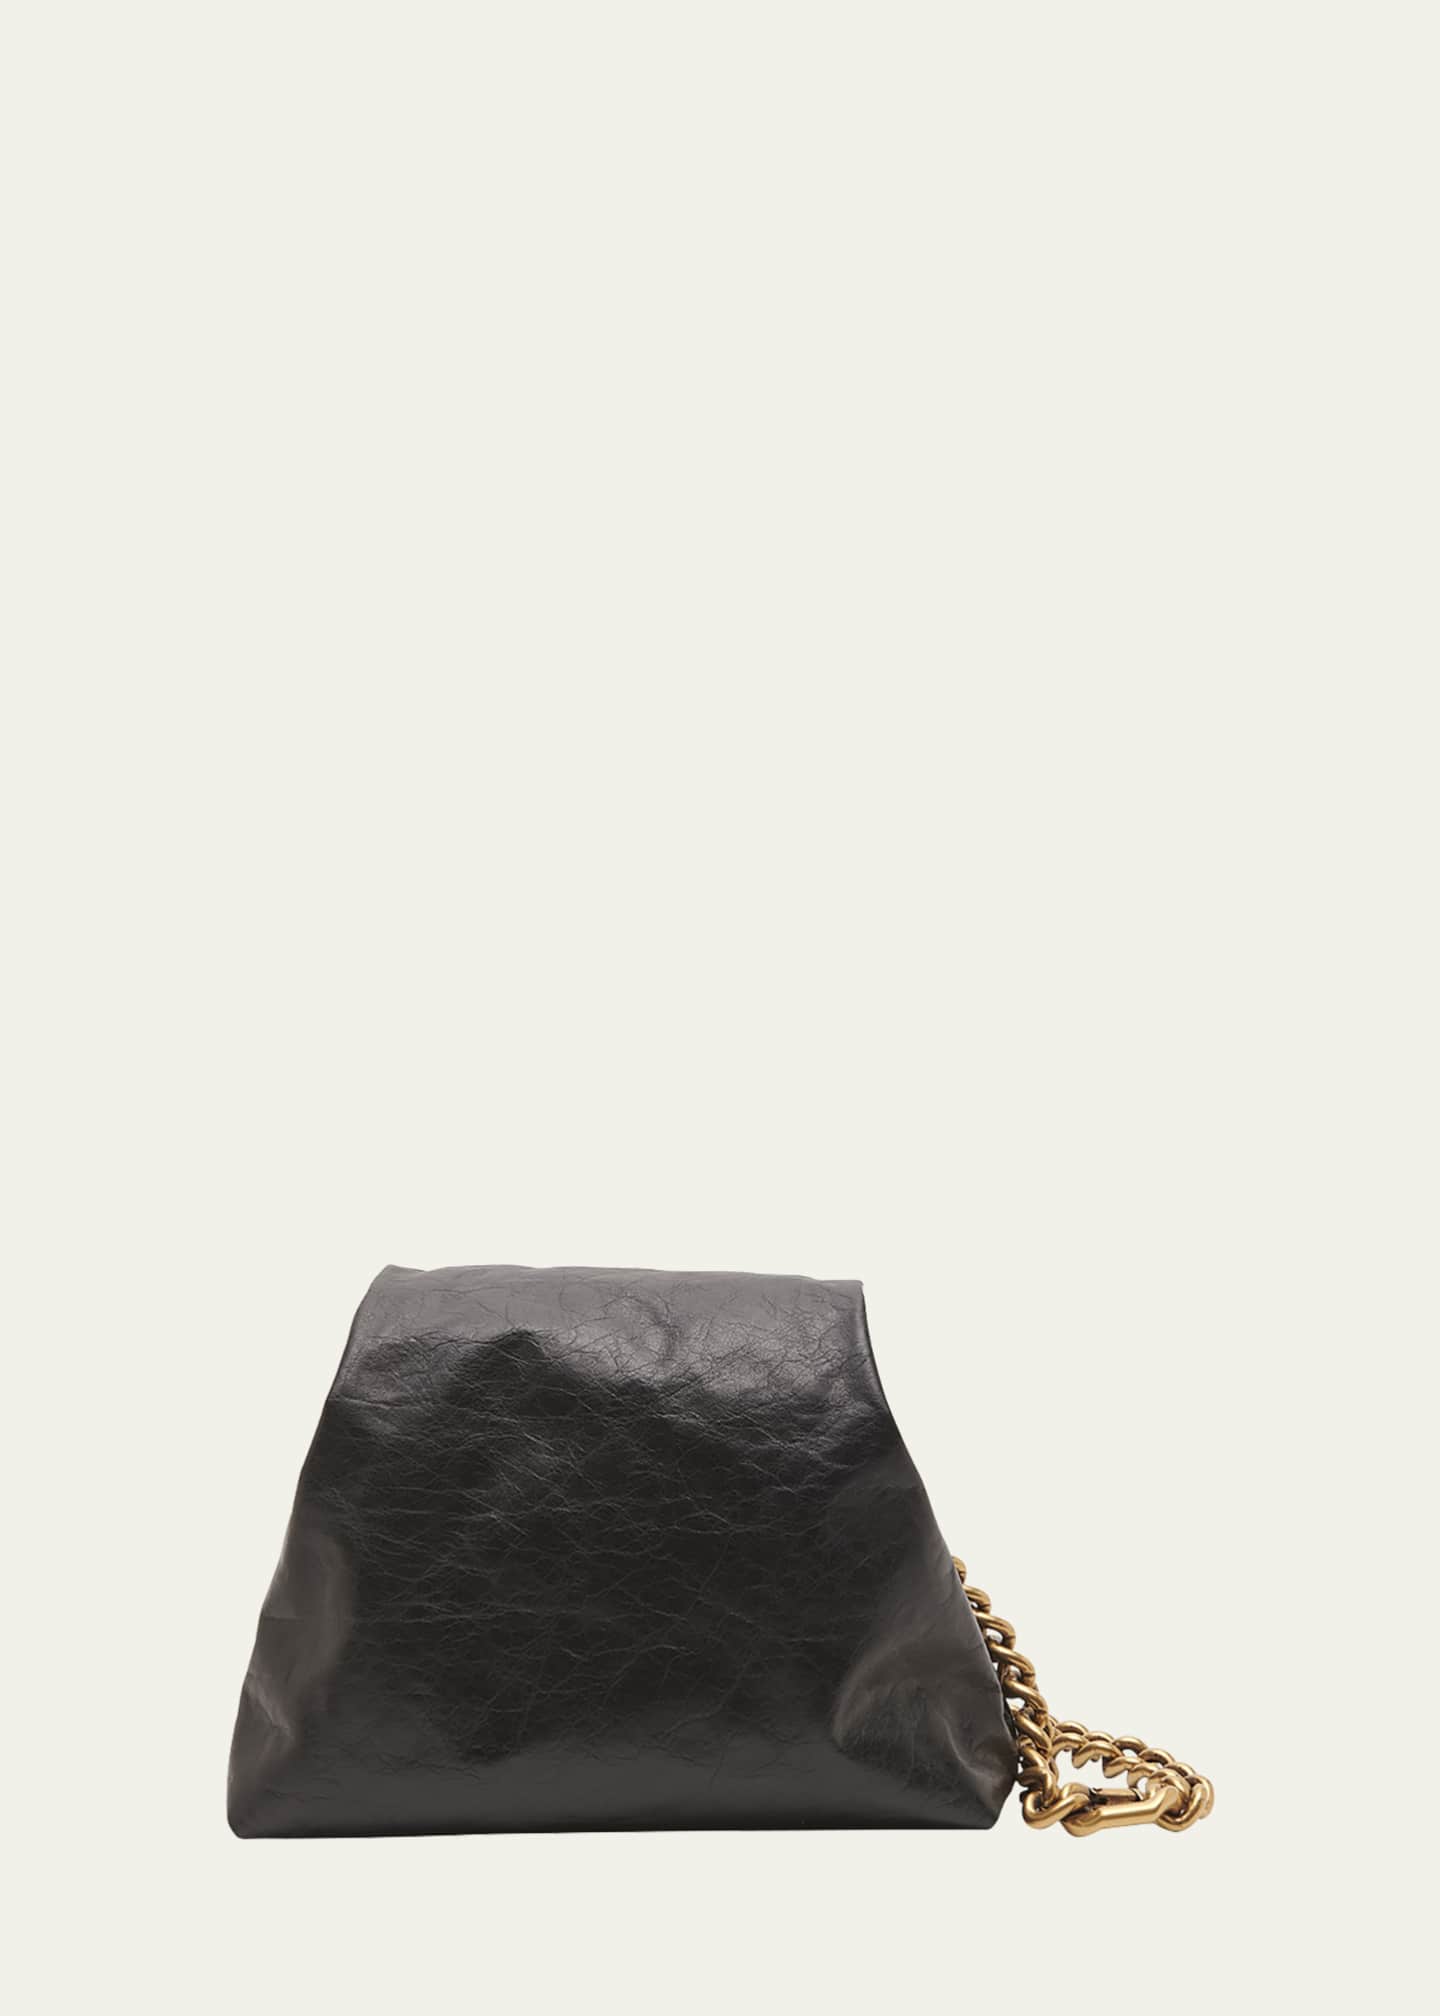 Balenciaga Puffer Leather Chain Shoulder Bag